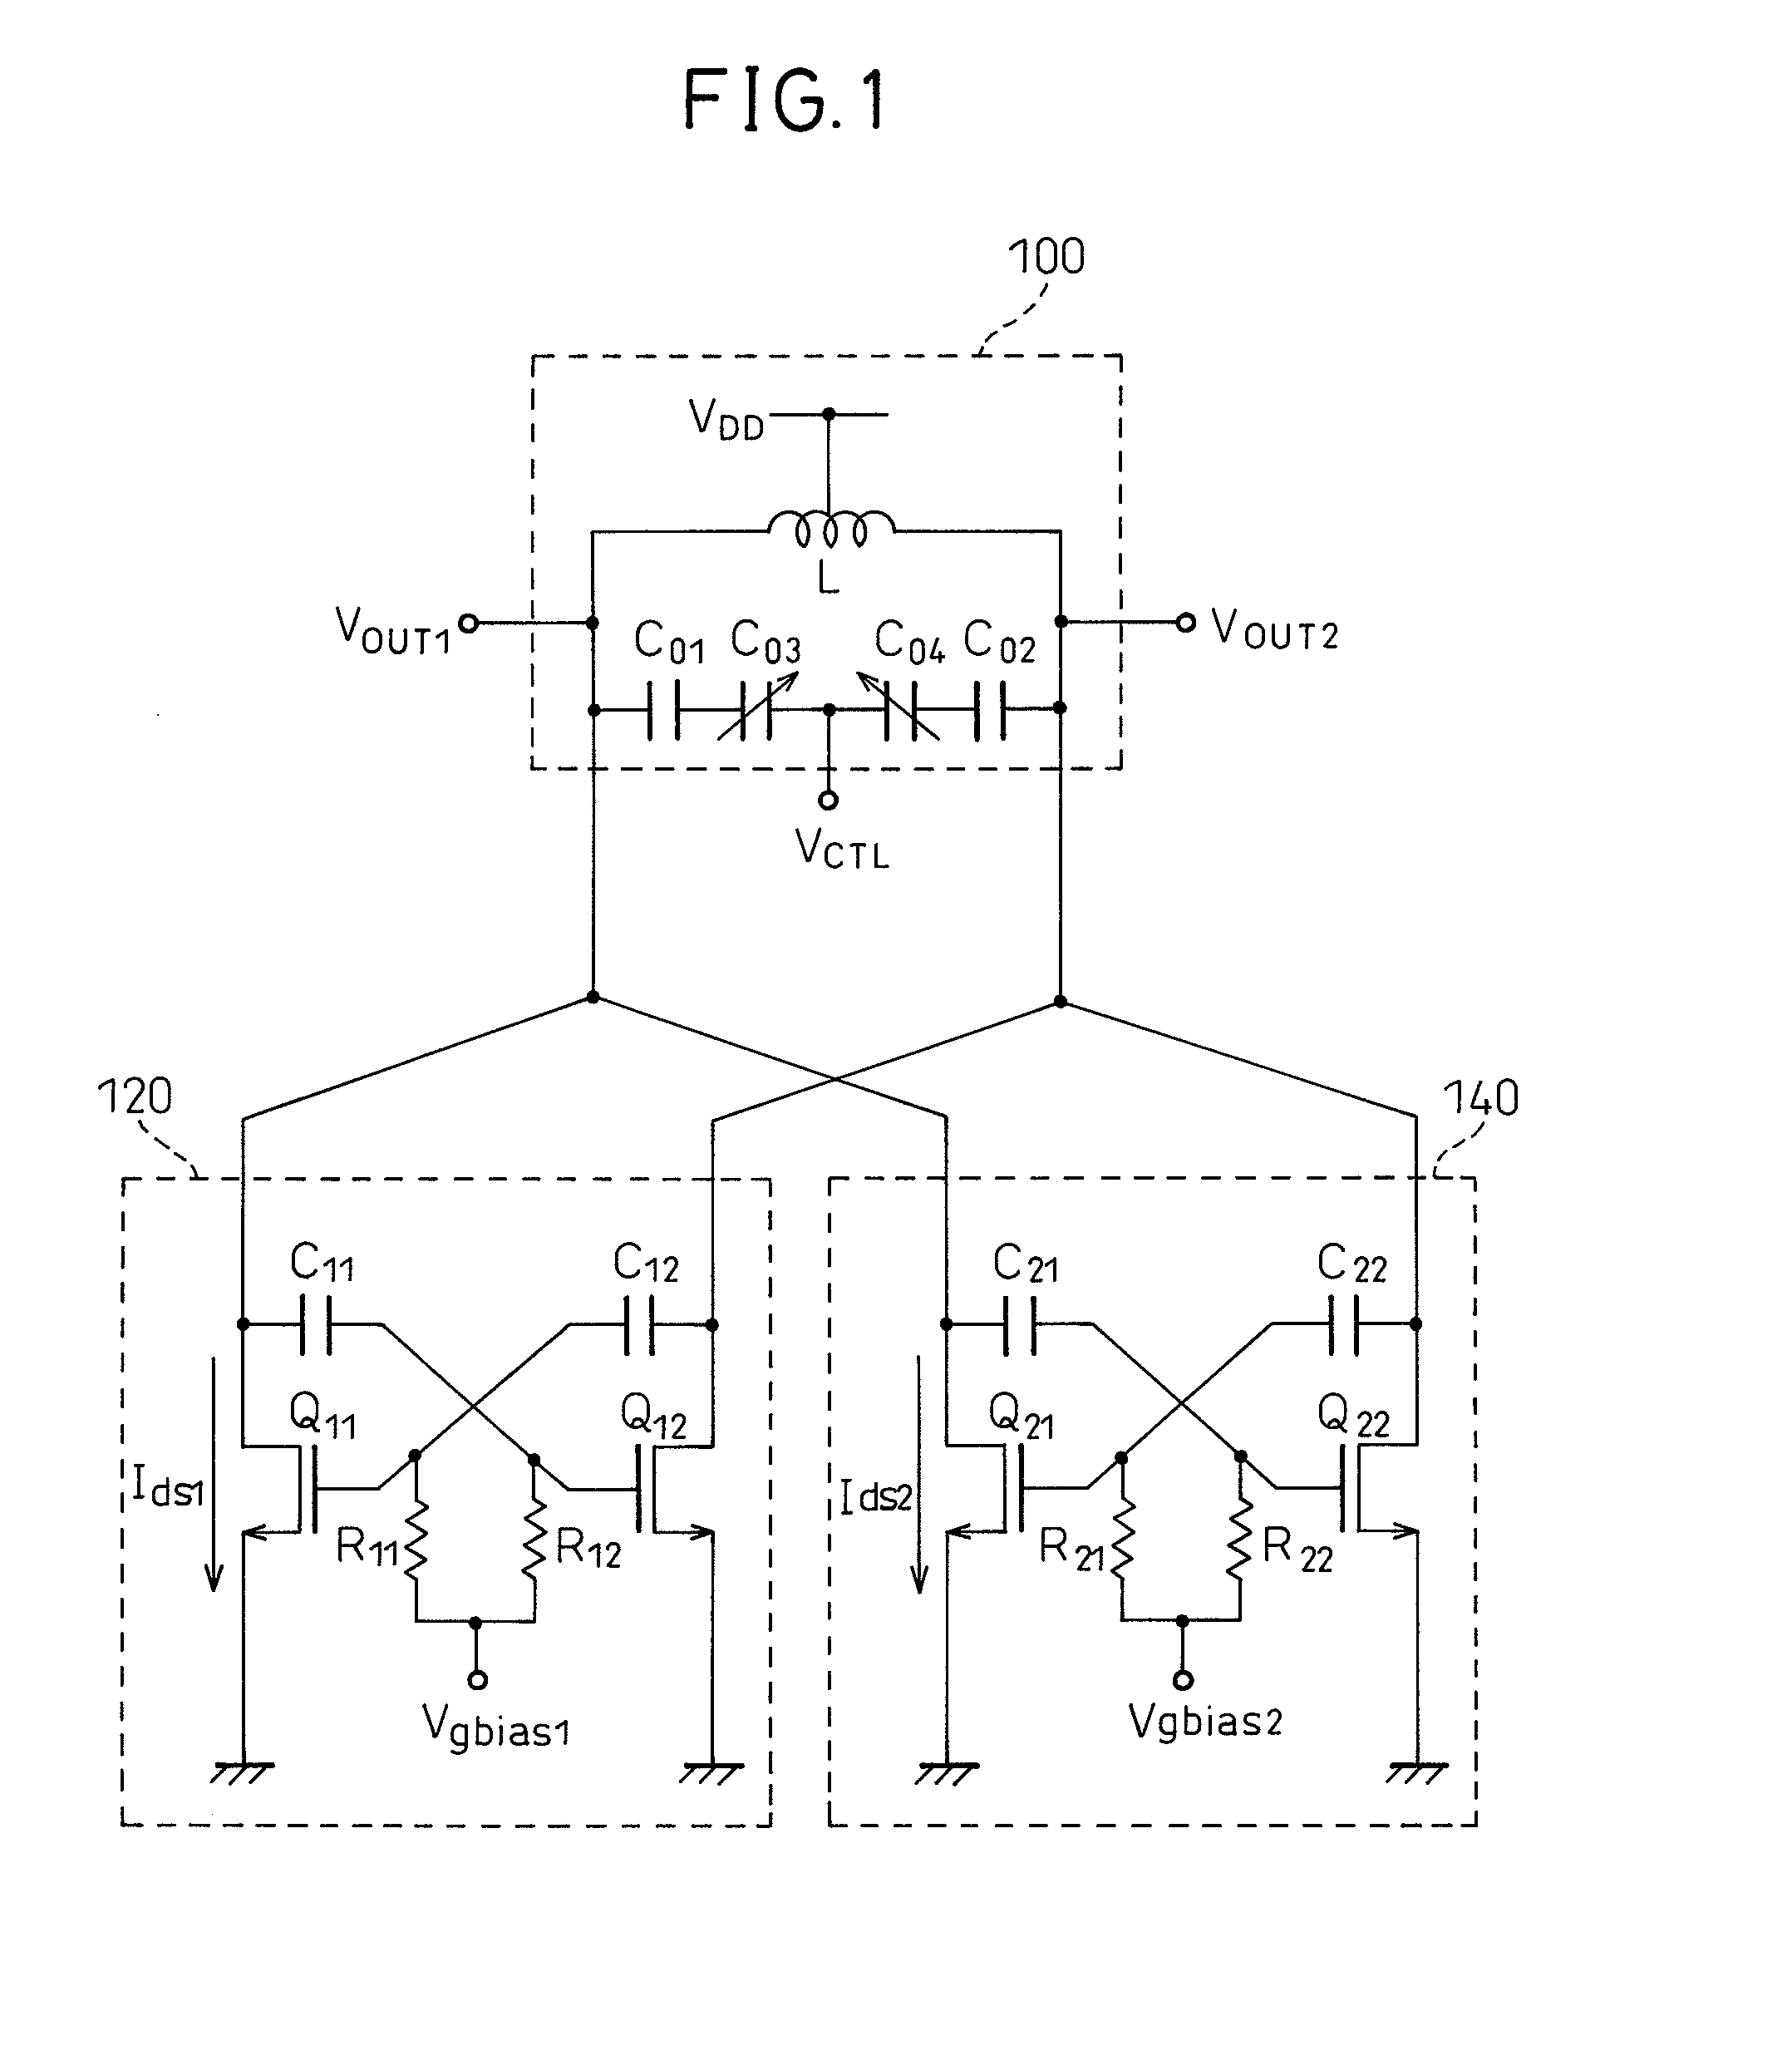 Voltage-controlled oscillator